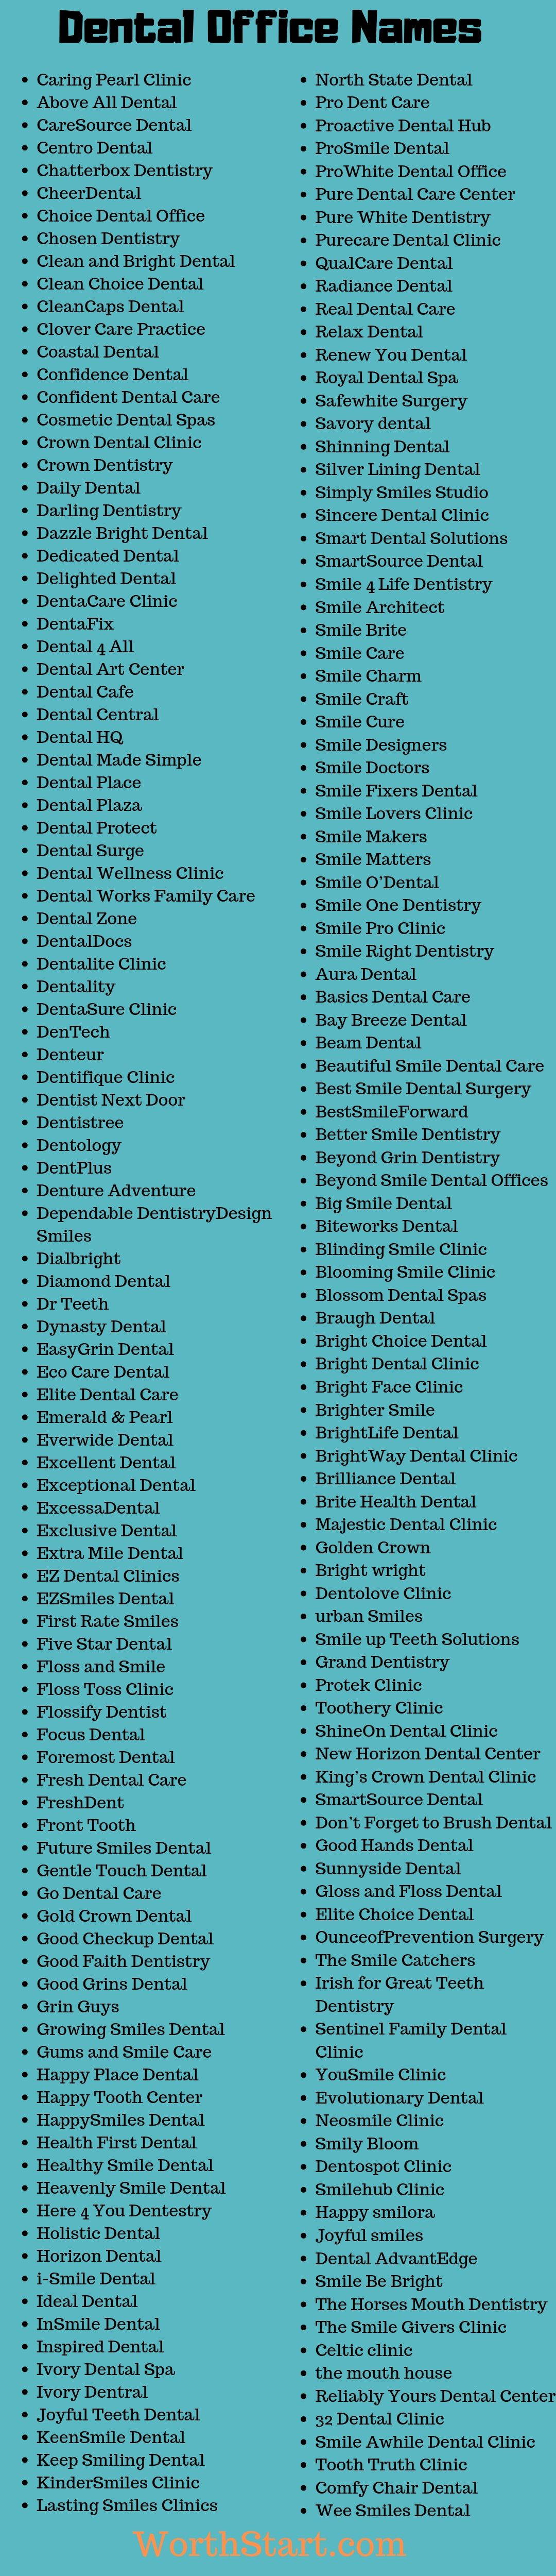 dental clinic names alphabetical